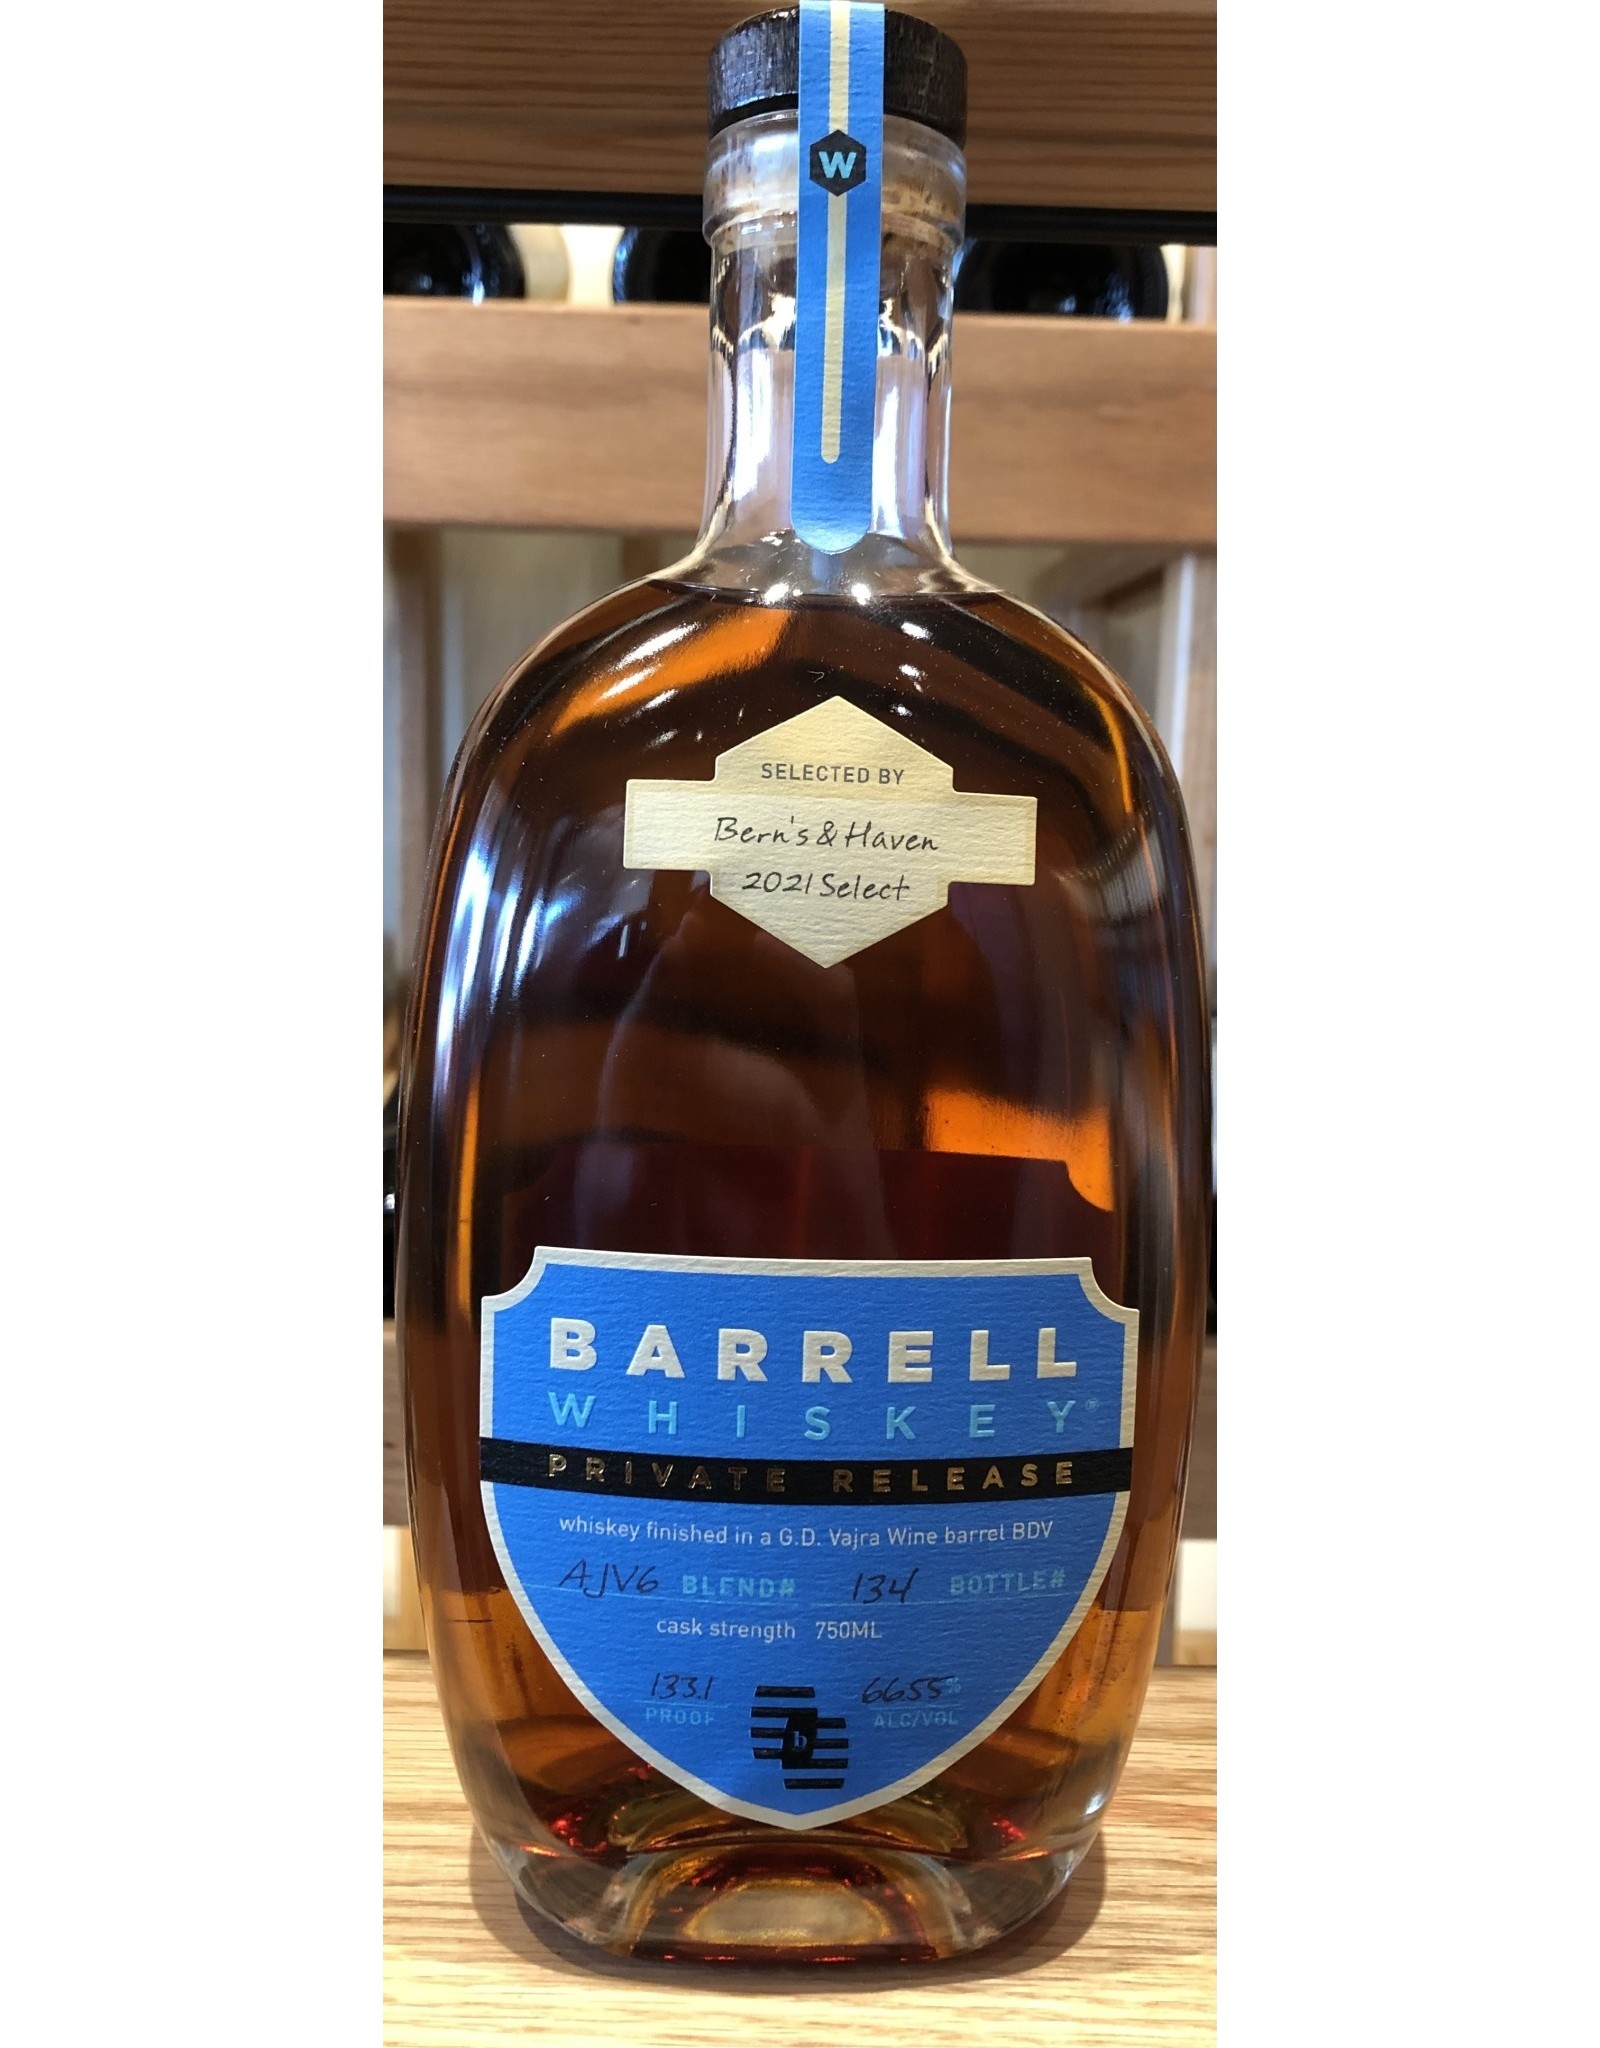 Bern's and Haven Barrell Whiskey Private Release Vajra Barolo Cask Single Barrel